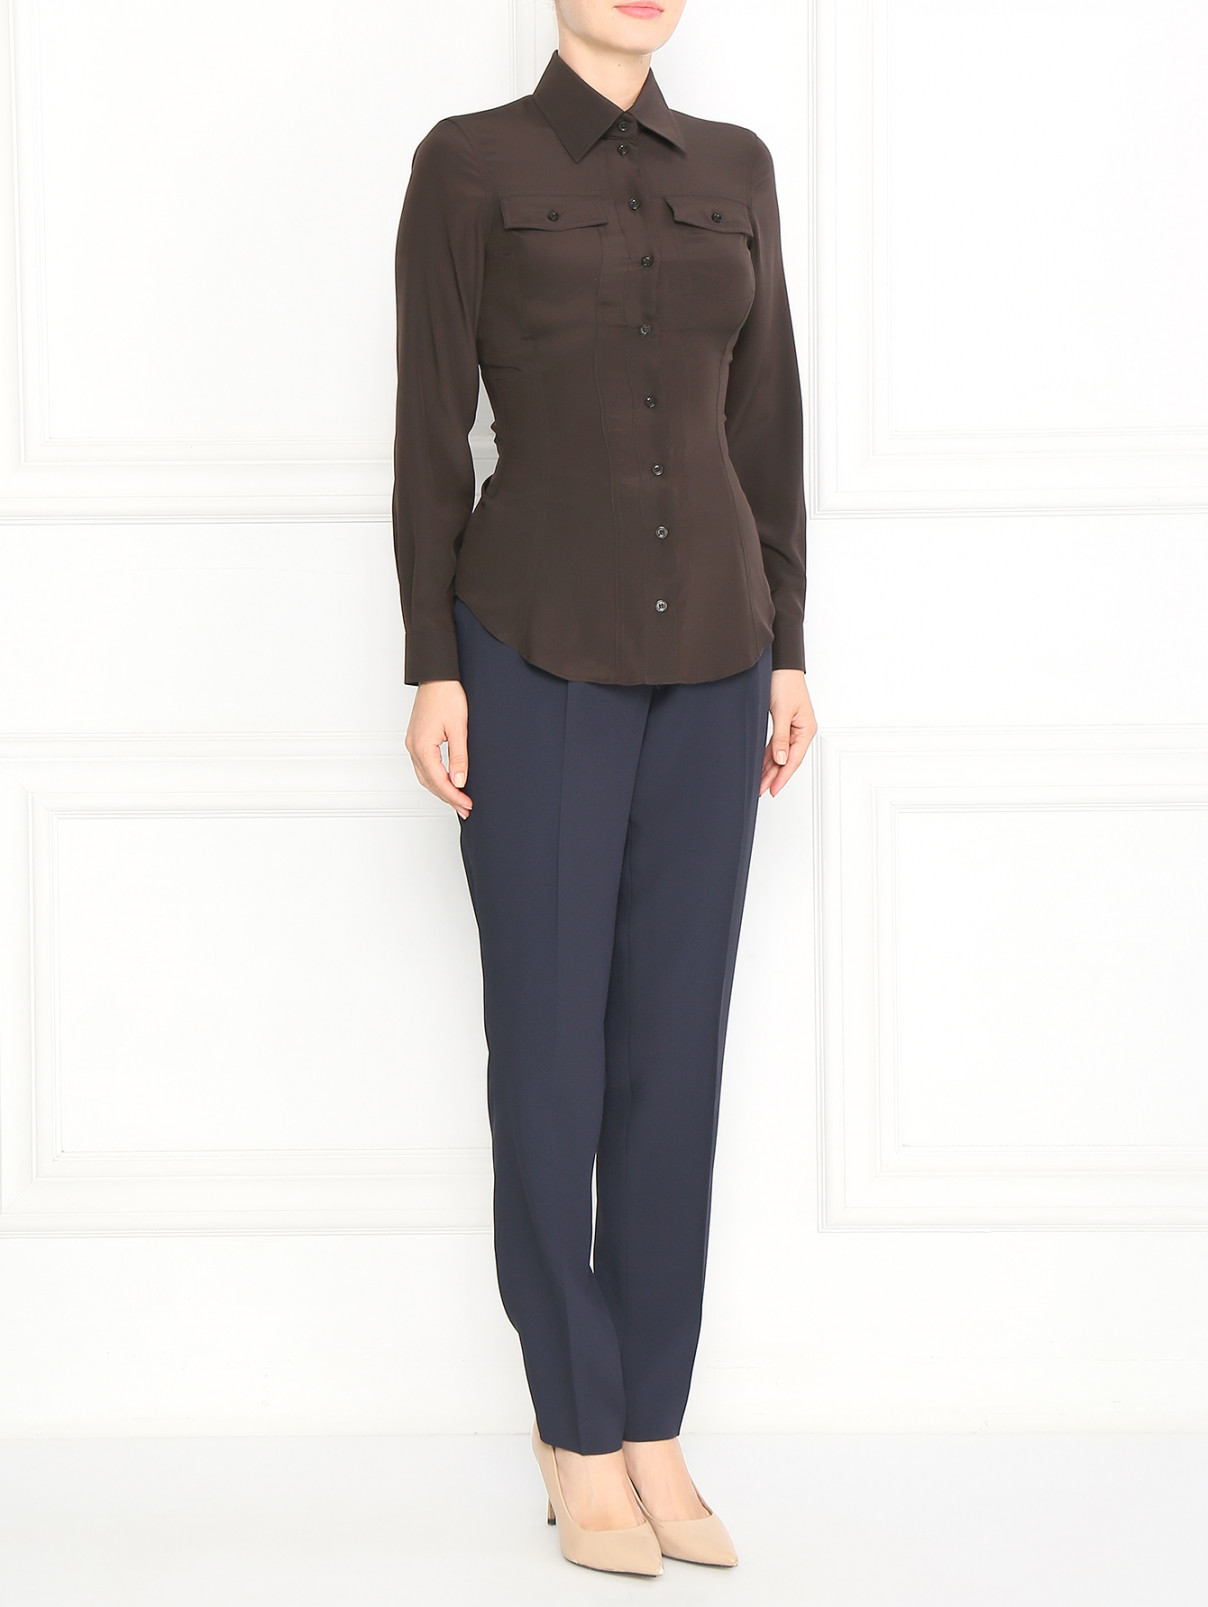 Блуза из шелка Moschino  –  Модель Общий вид  – Цвет:  Коричневый